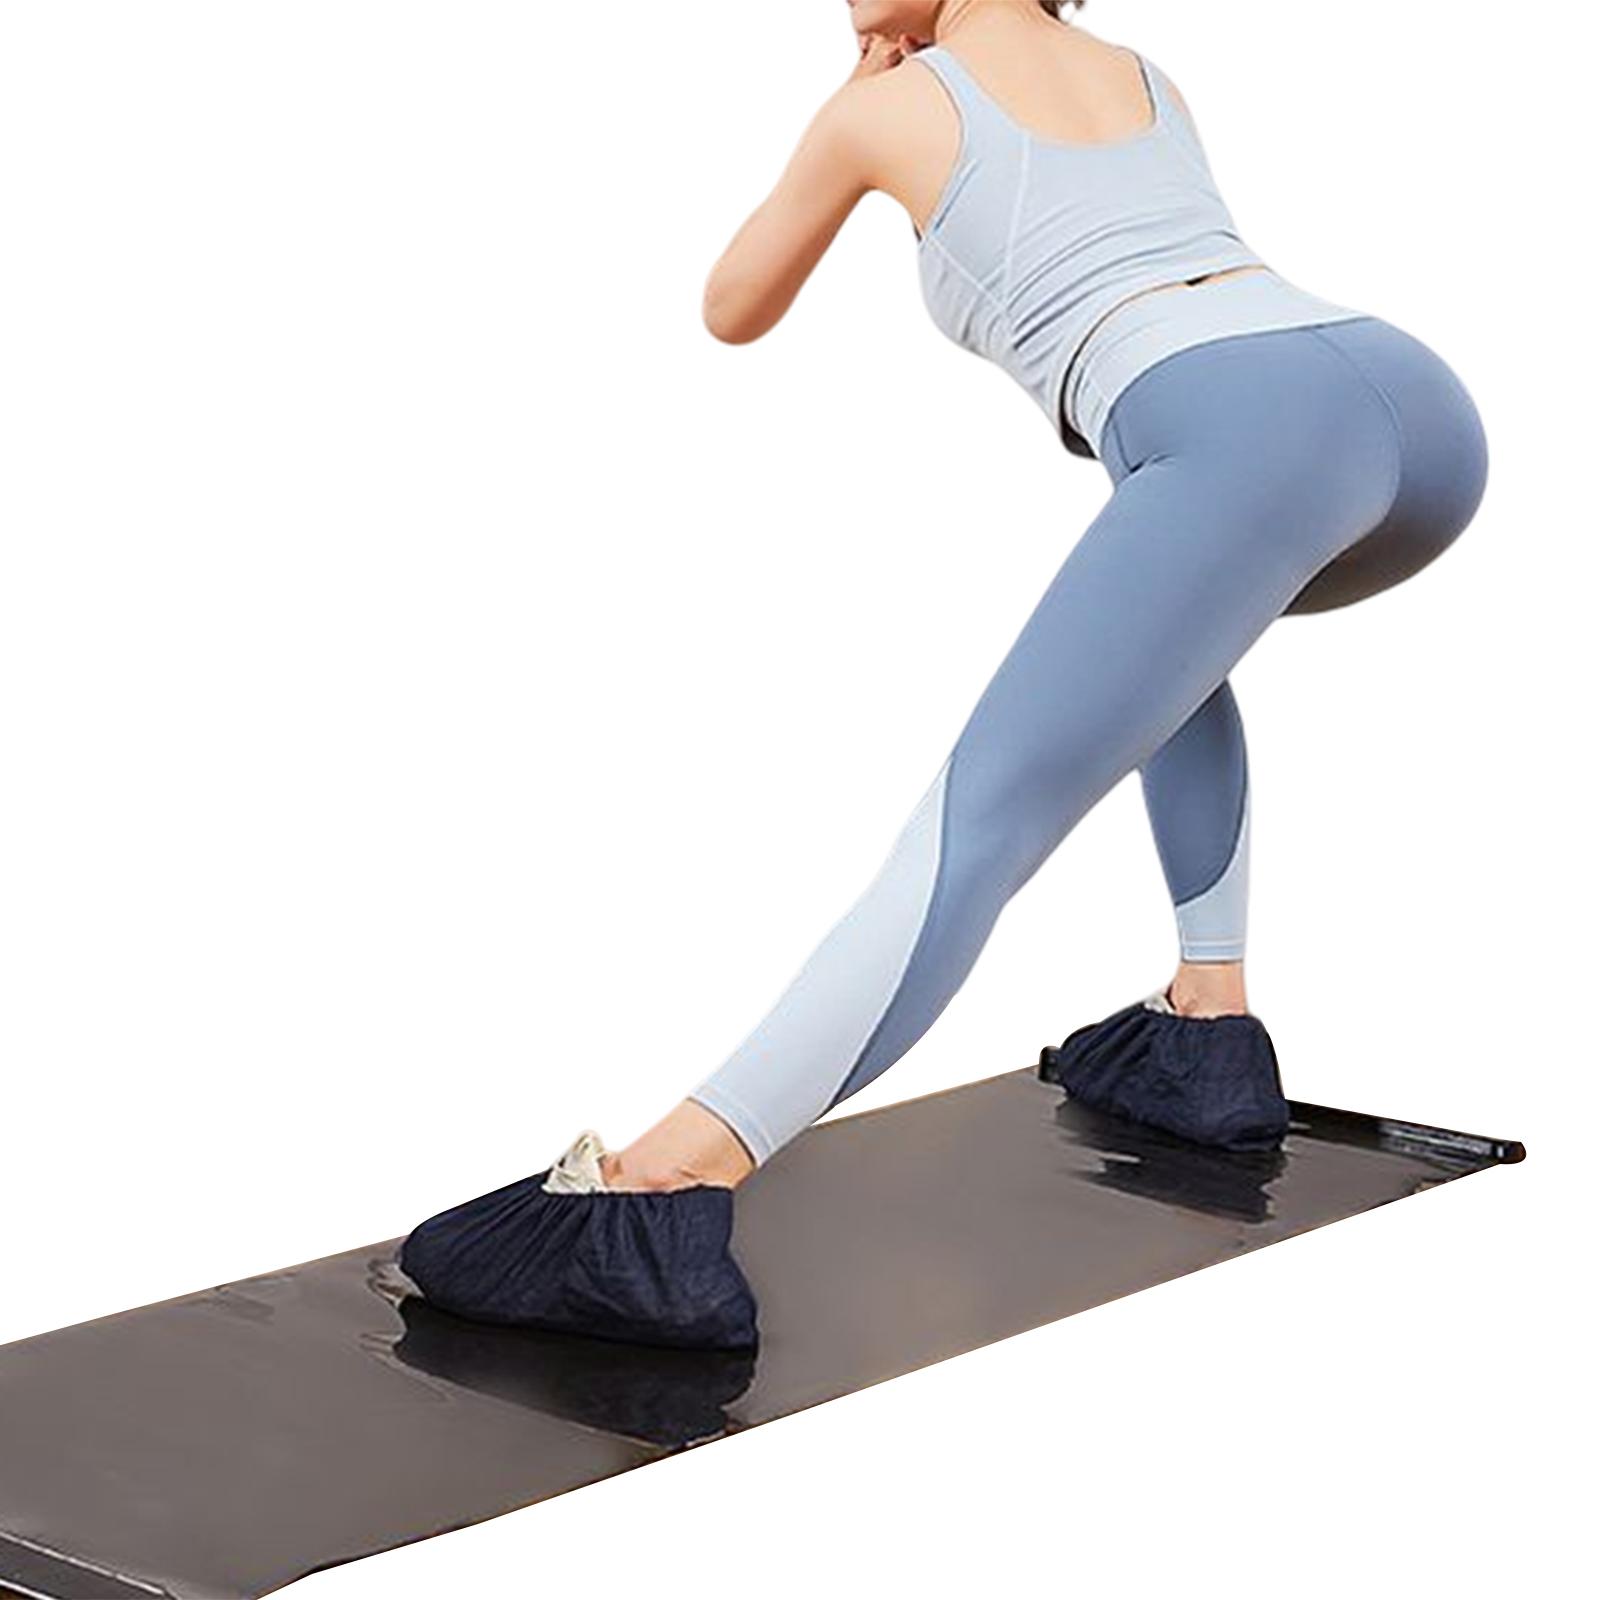 Yoga Slide Board Pad Portable Sliding Board for Leg Core Training Skating Black Color 1.4m